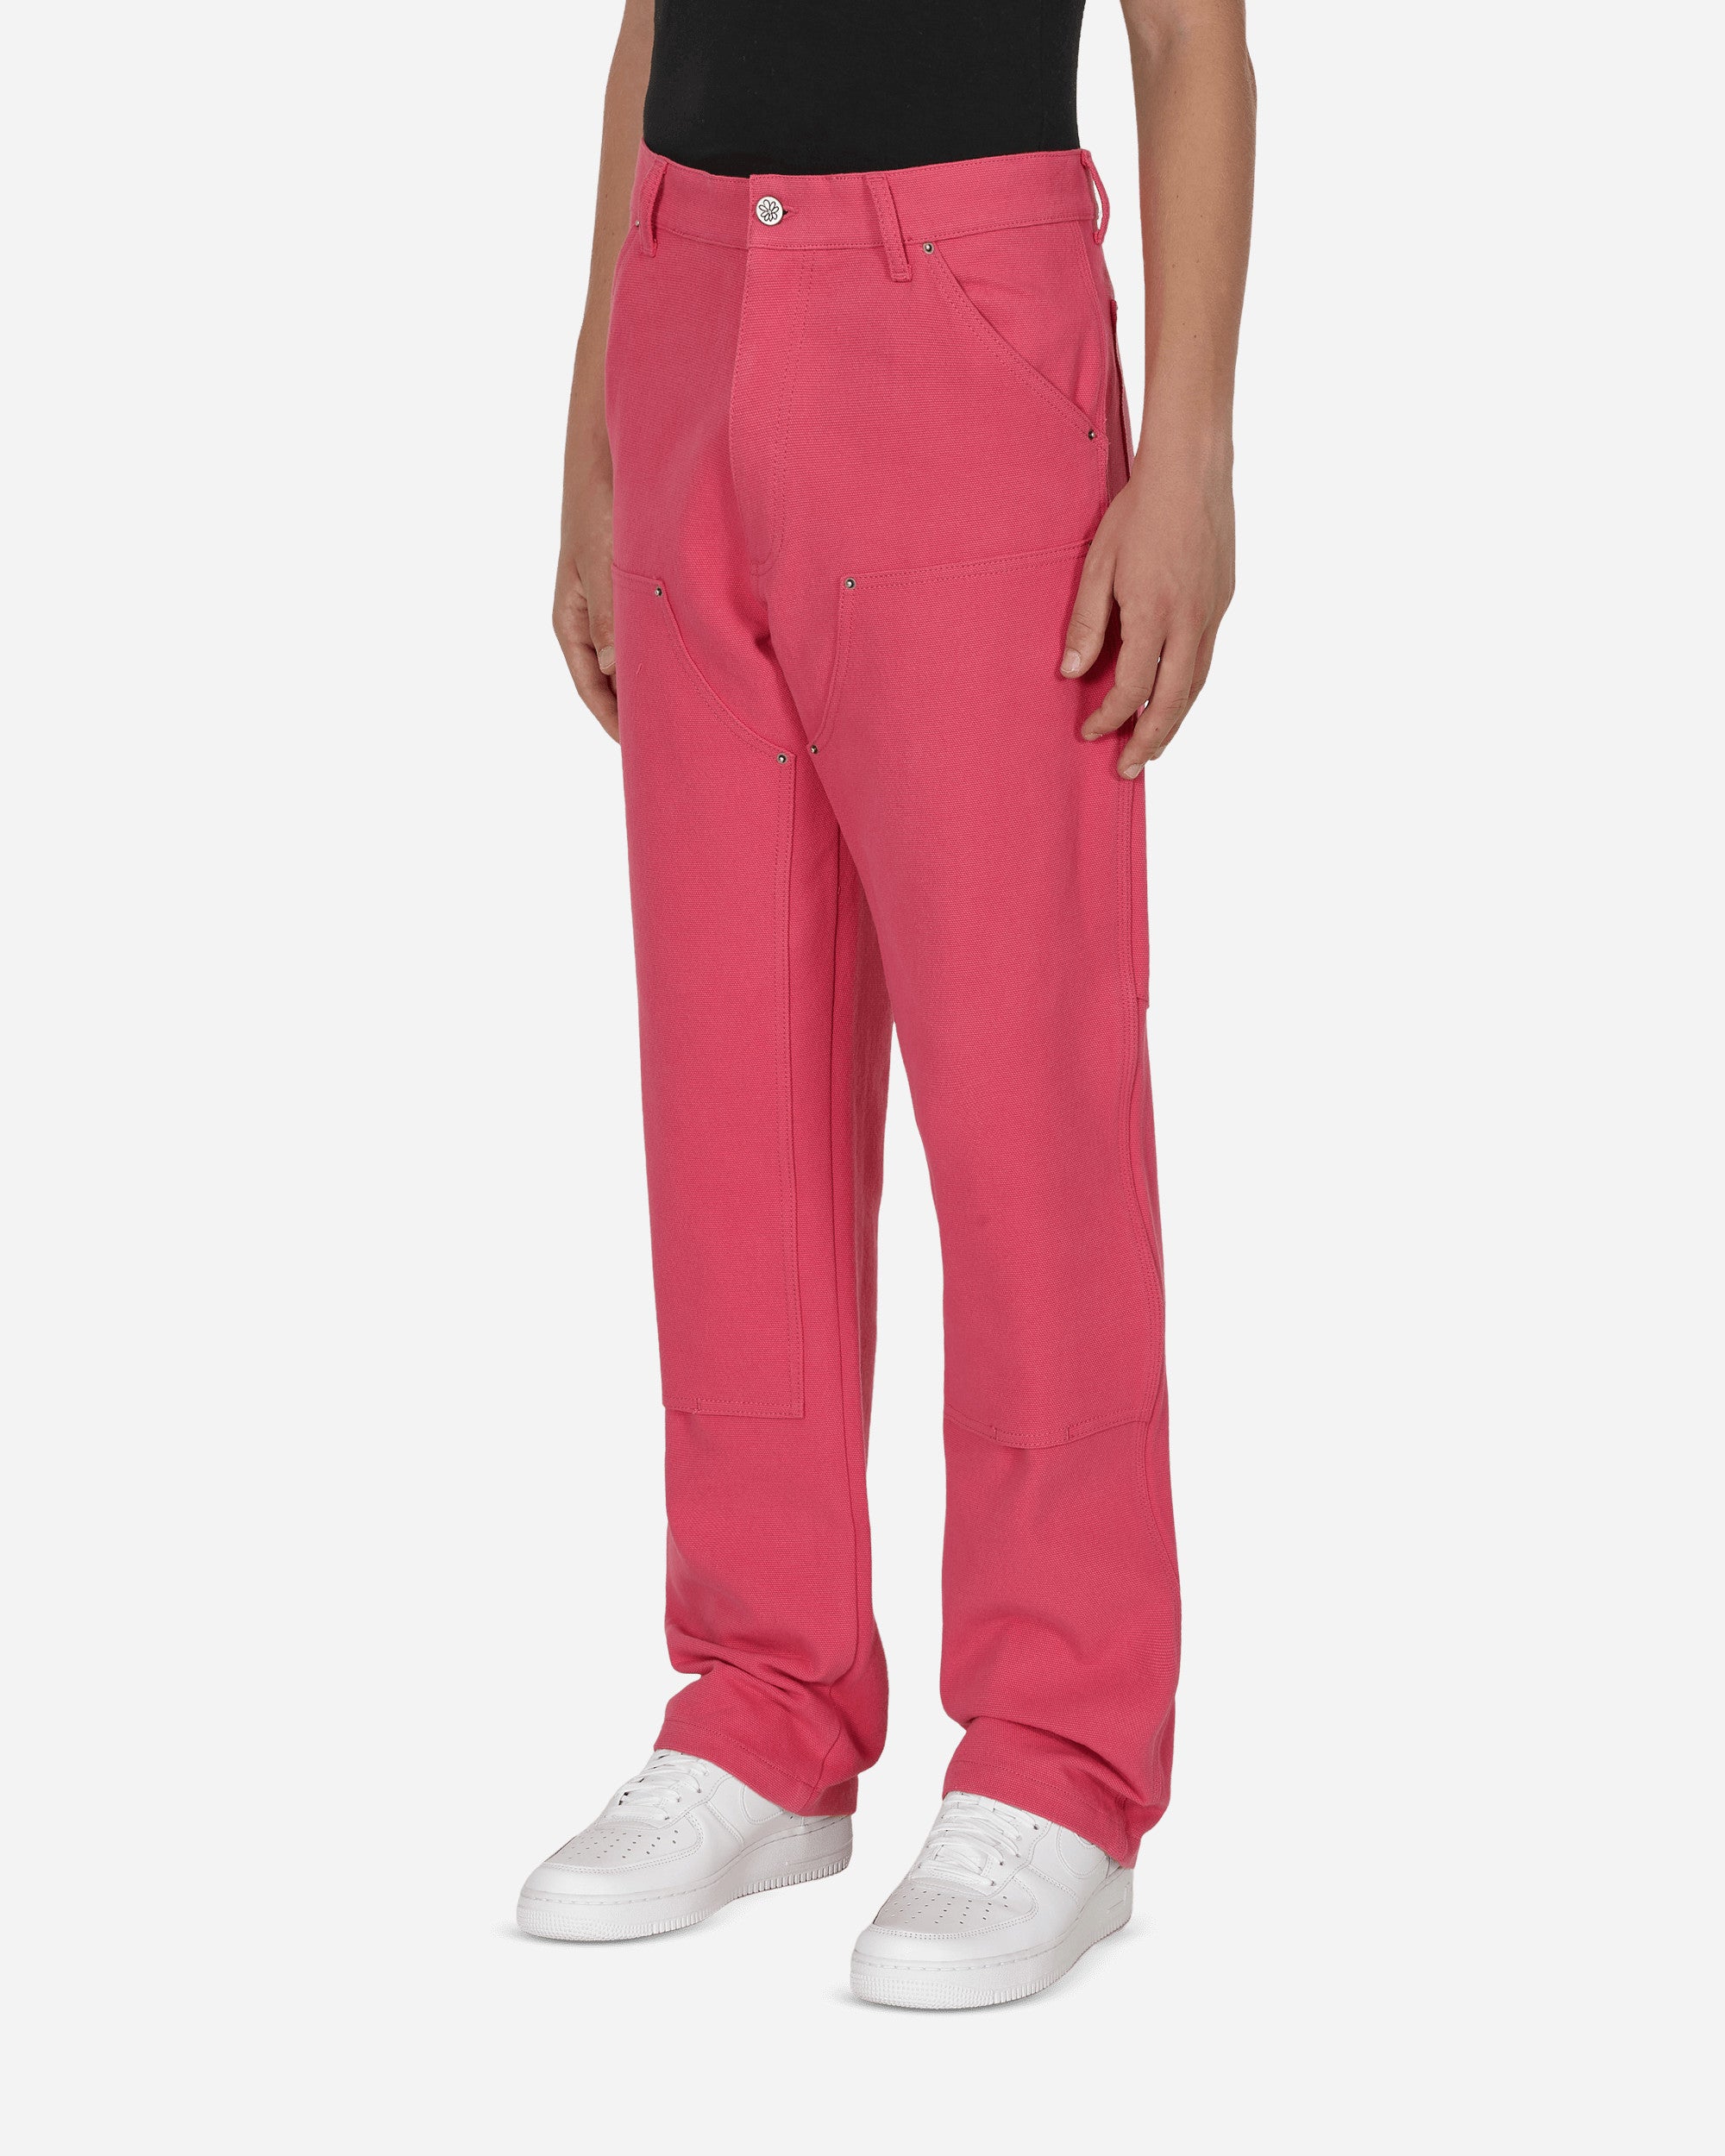 Sky High Farm Workwear Canvas Pants Woven Pink Pants Trousers SHF02P007 2